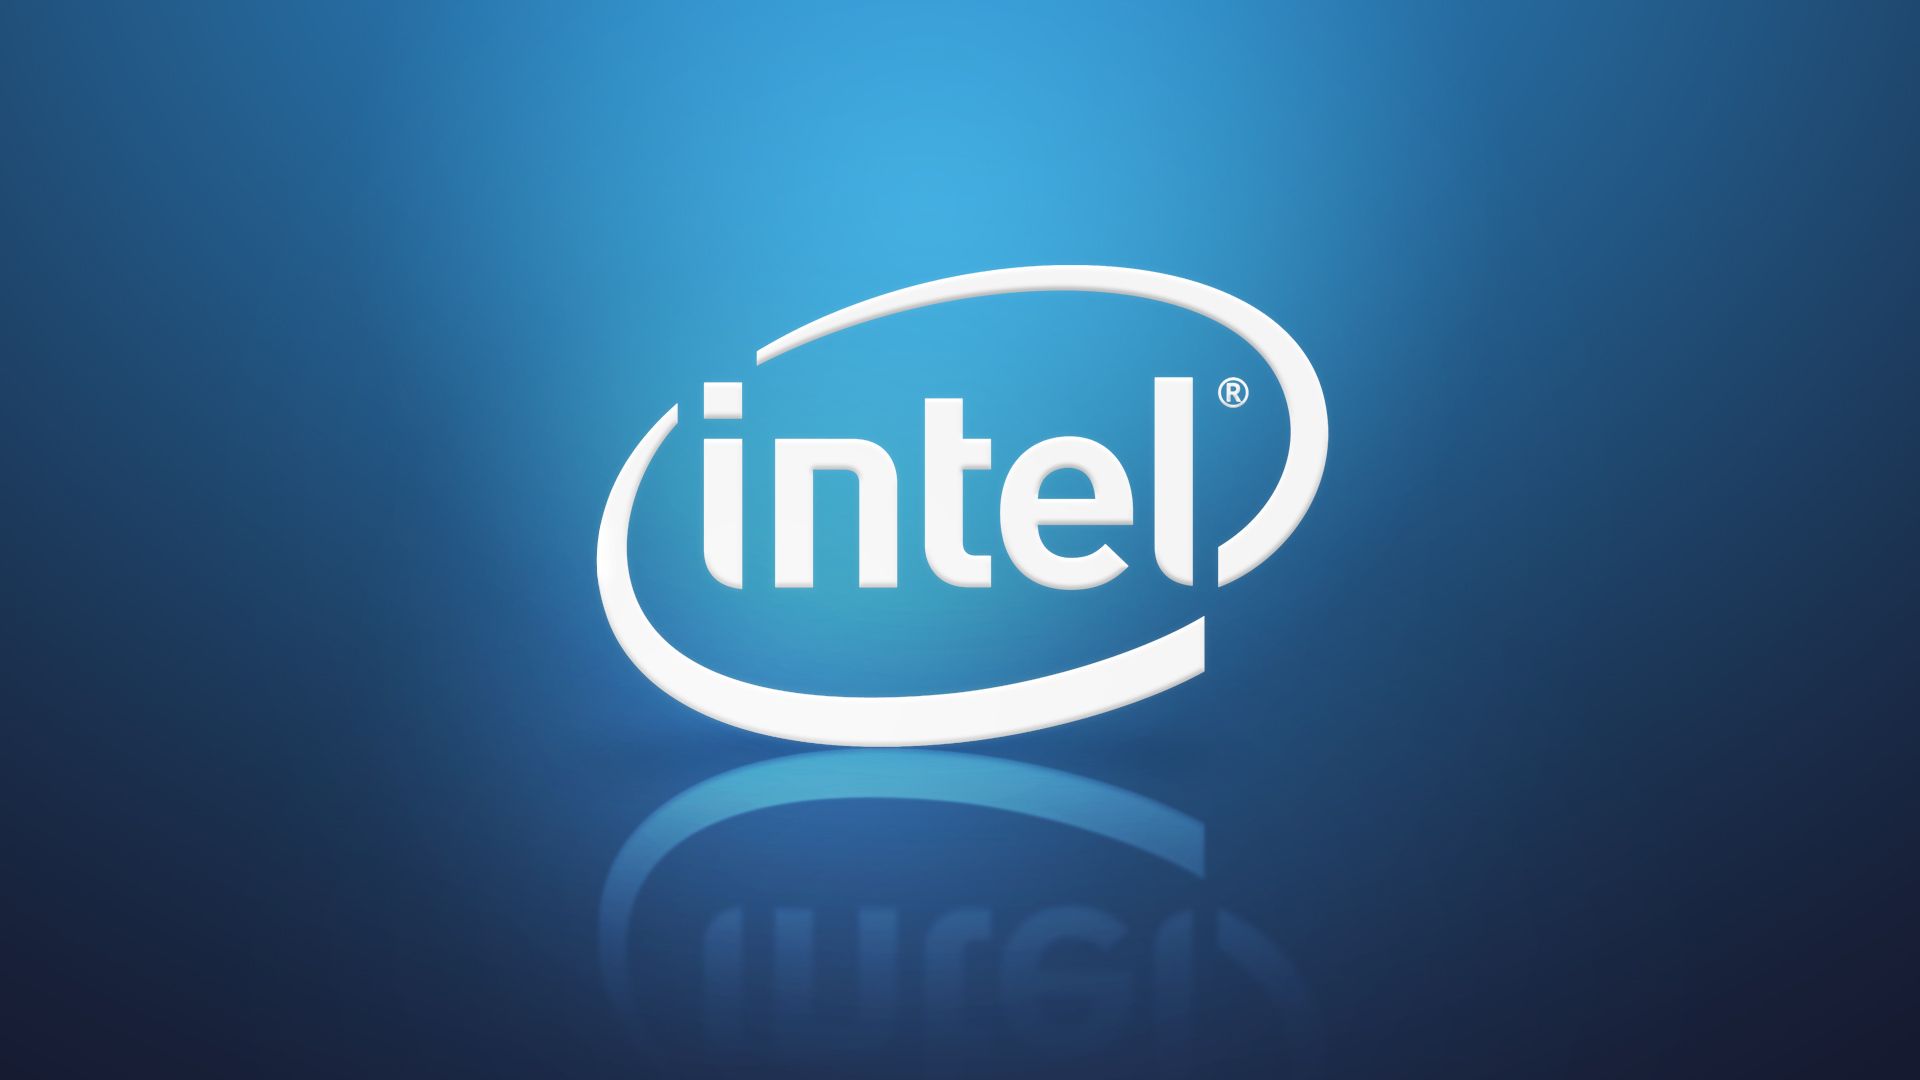 Download Intel Core i5 Wallpaper 45407 1920x1200 px High Definition Wallpaper